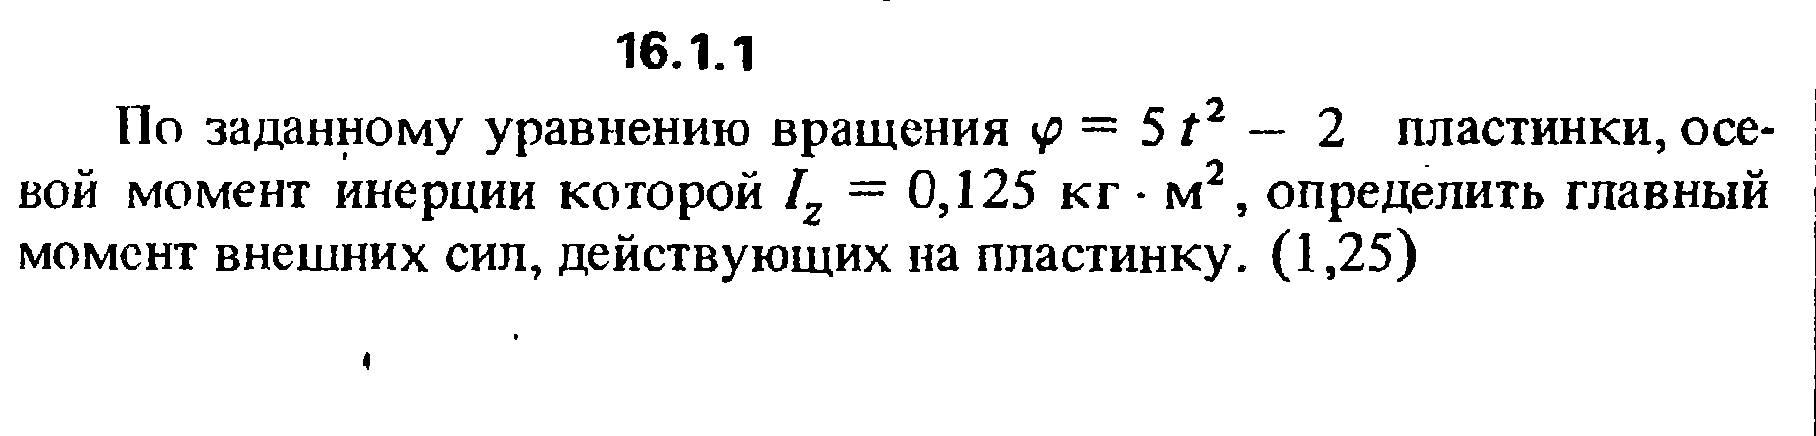 Решение задачи 16.1.1 из сборника Кепе О.Е. 1989 года